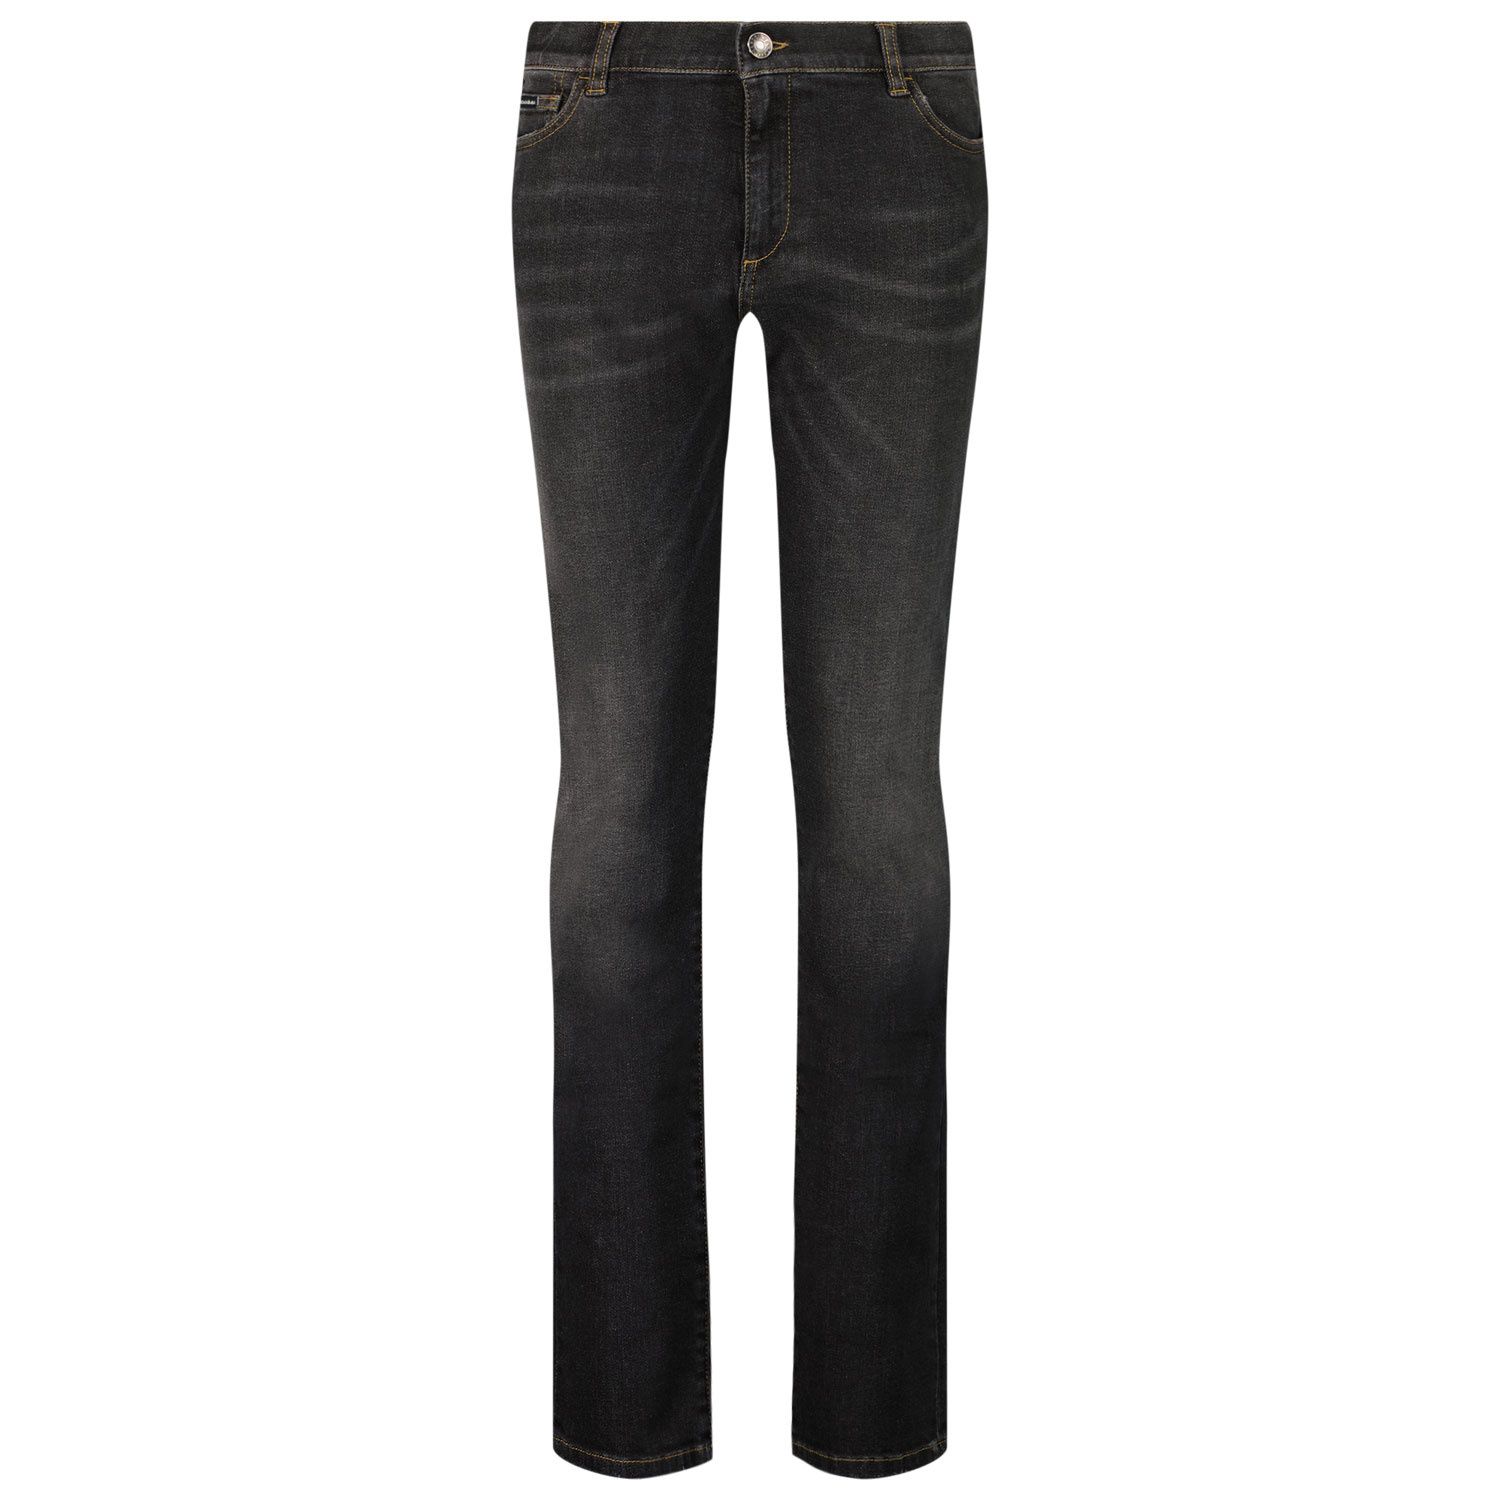 Afbeelding van Dolce & Gabbana L41F95 kinder jeans donker grijs